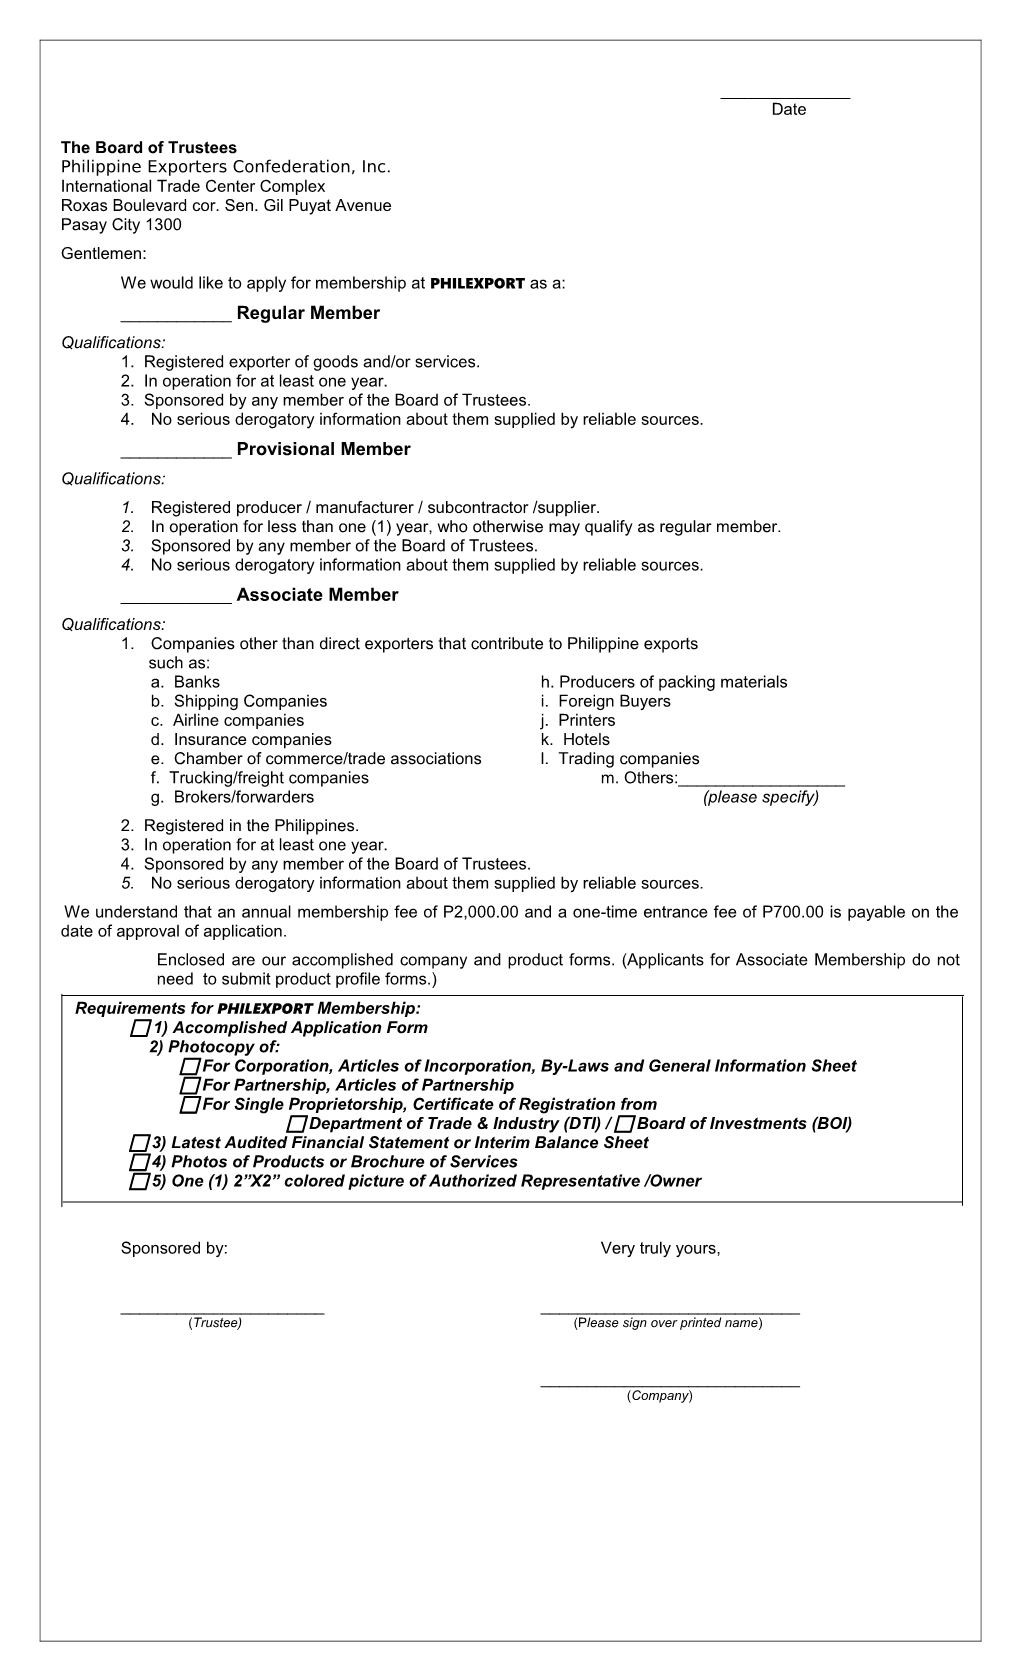 Requirements for Philexport Membership